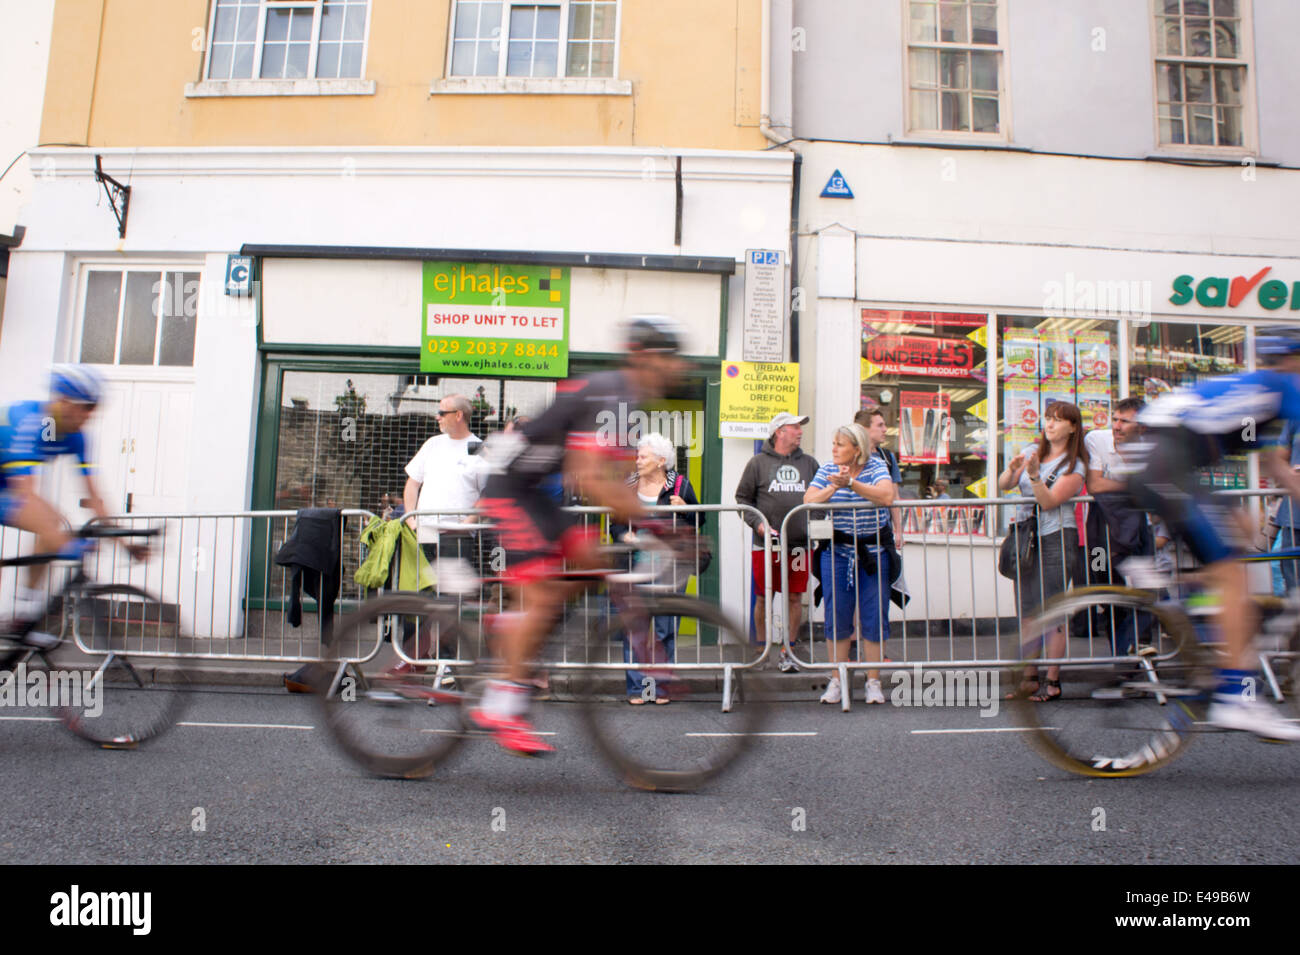 Festival of Cycling Road Race, Abergavenny, June 2014 Stock Photo